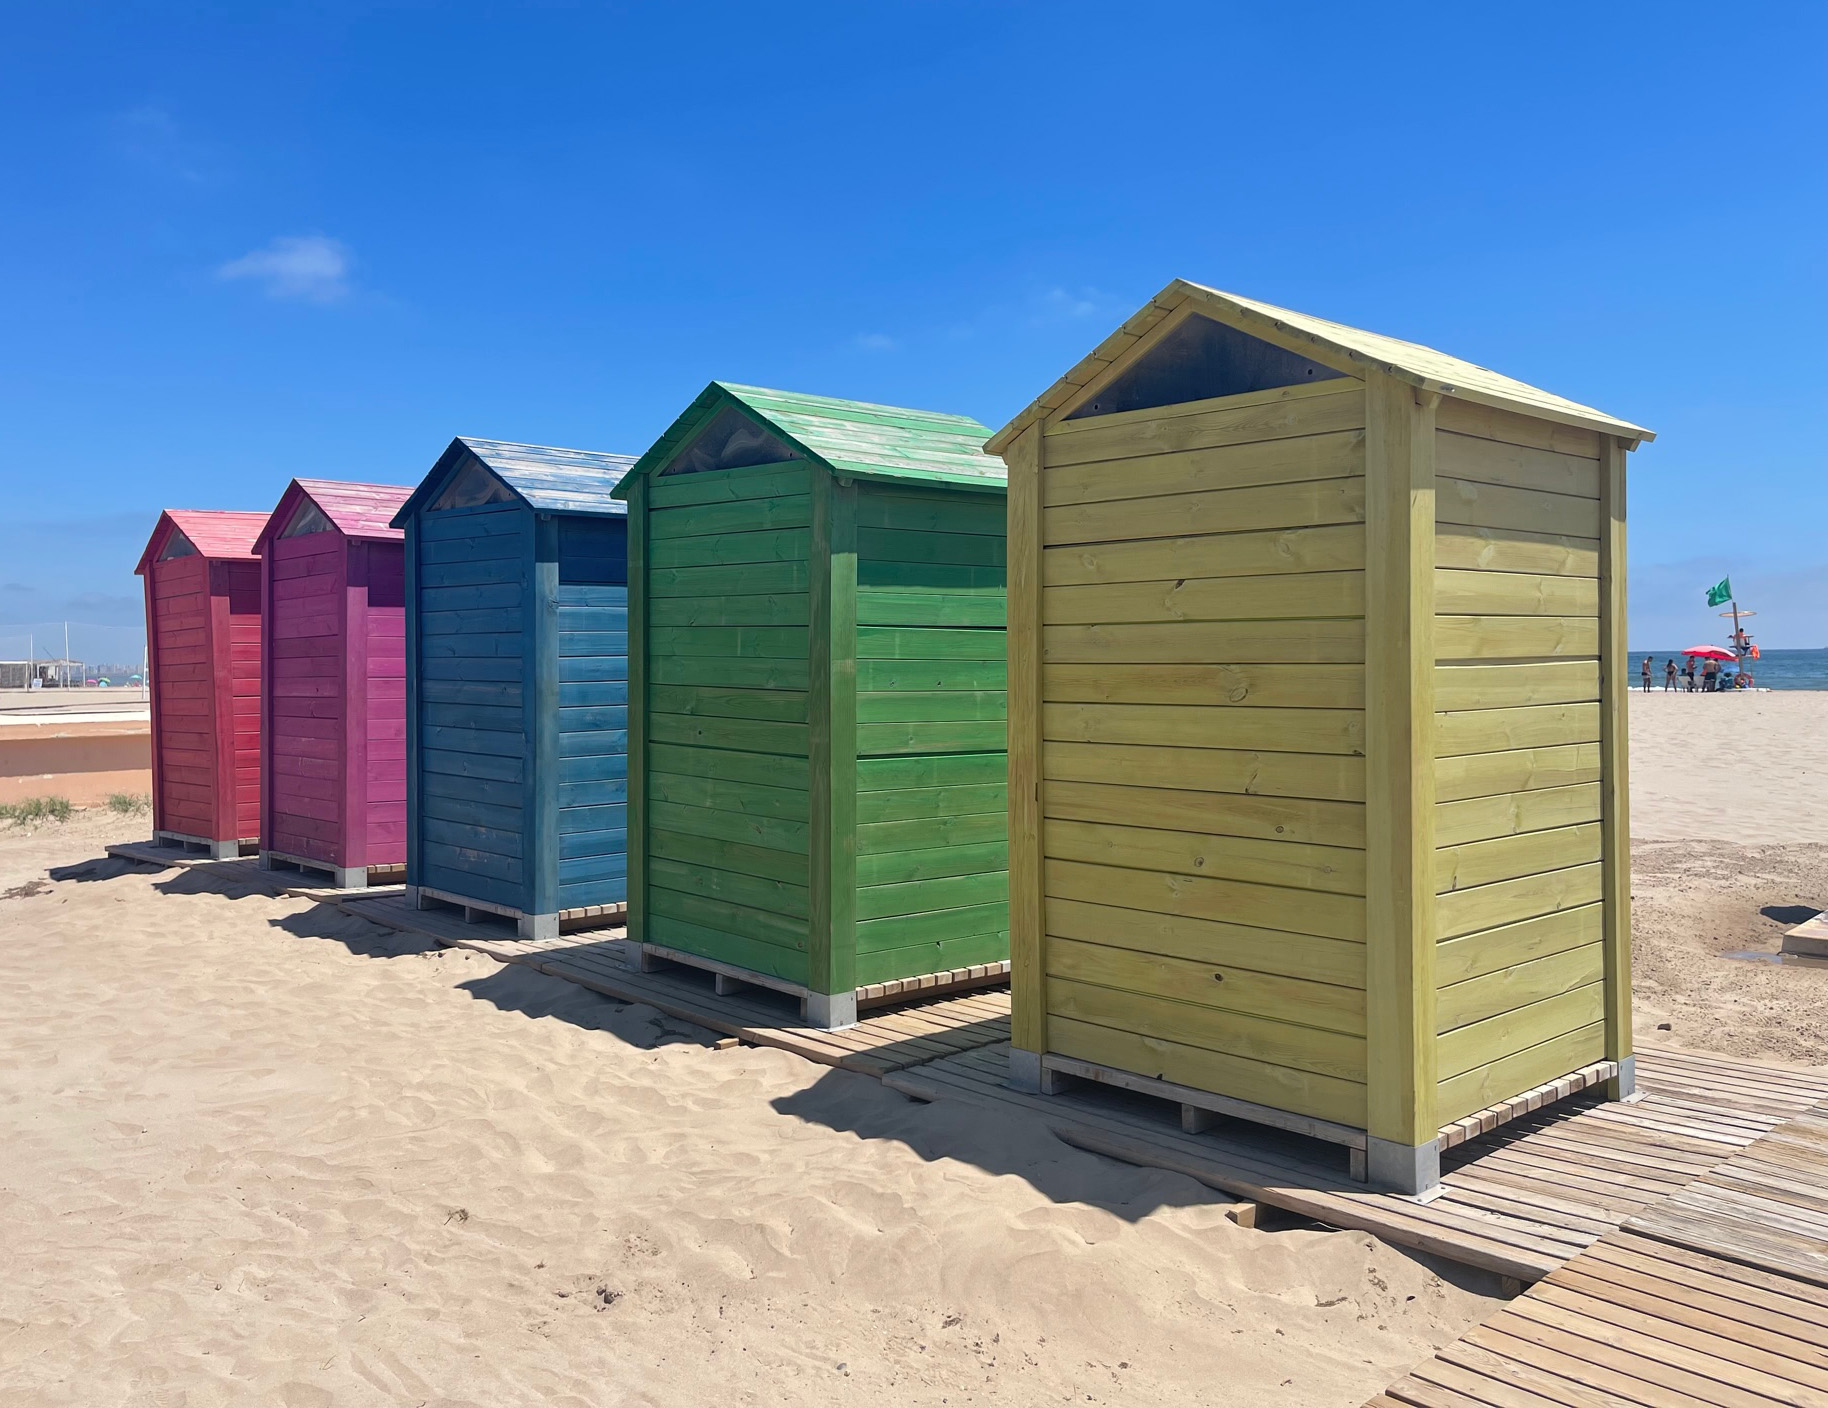 Coloured beach huts on Malvarosa beach